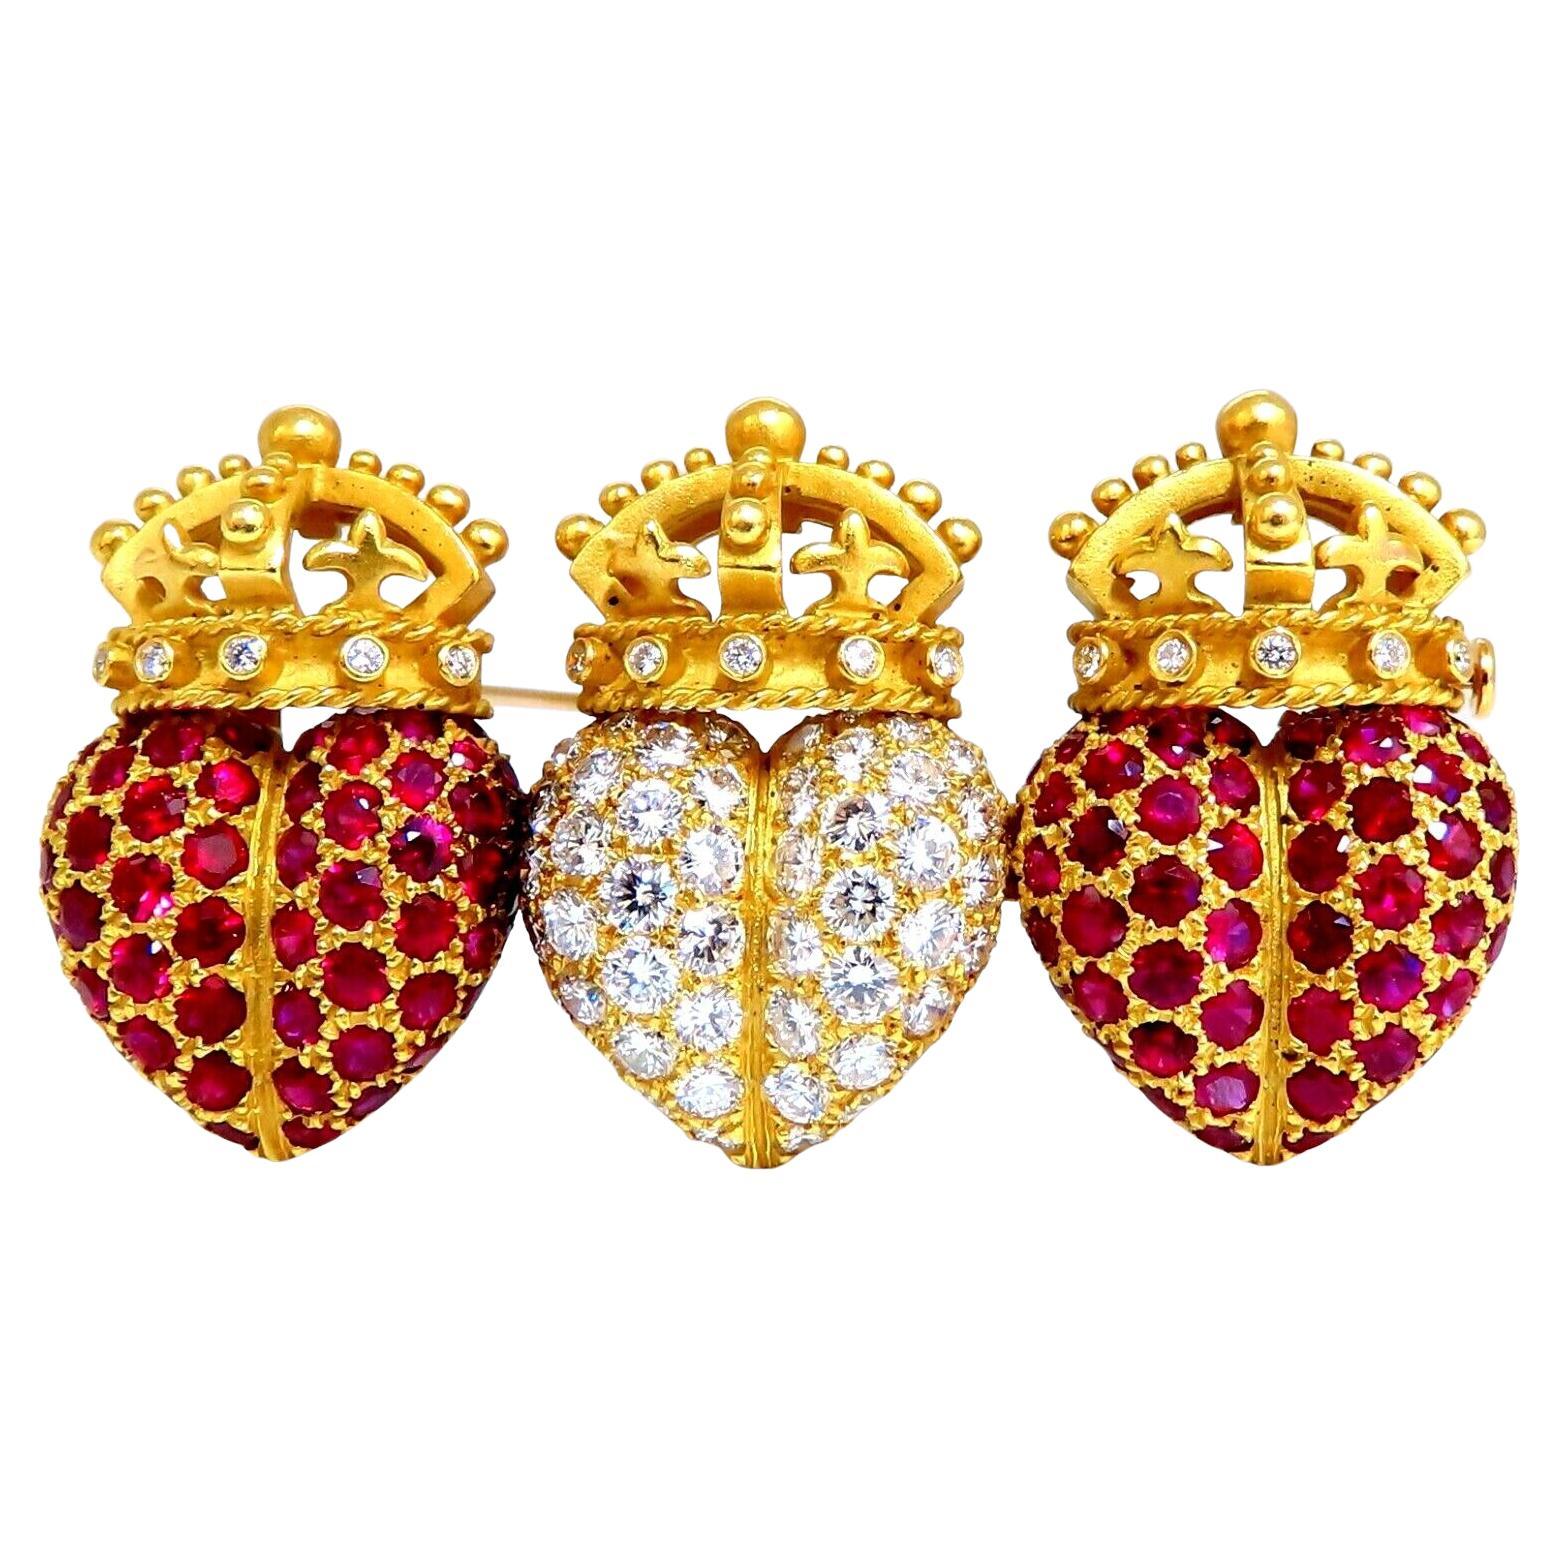 Designer B. Kieselstein Three Crown Pin 18kt Ruby Diamonds Retro Class